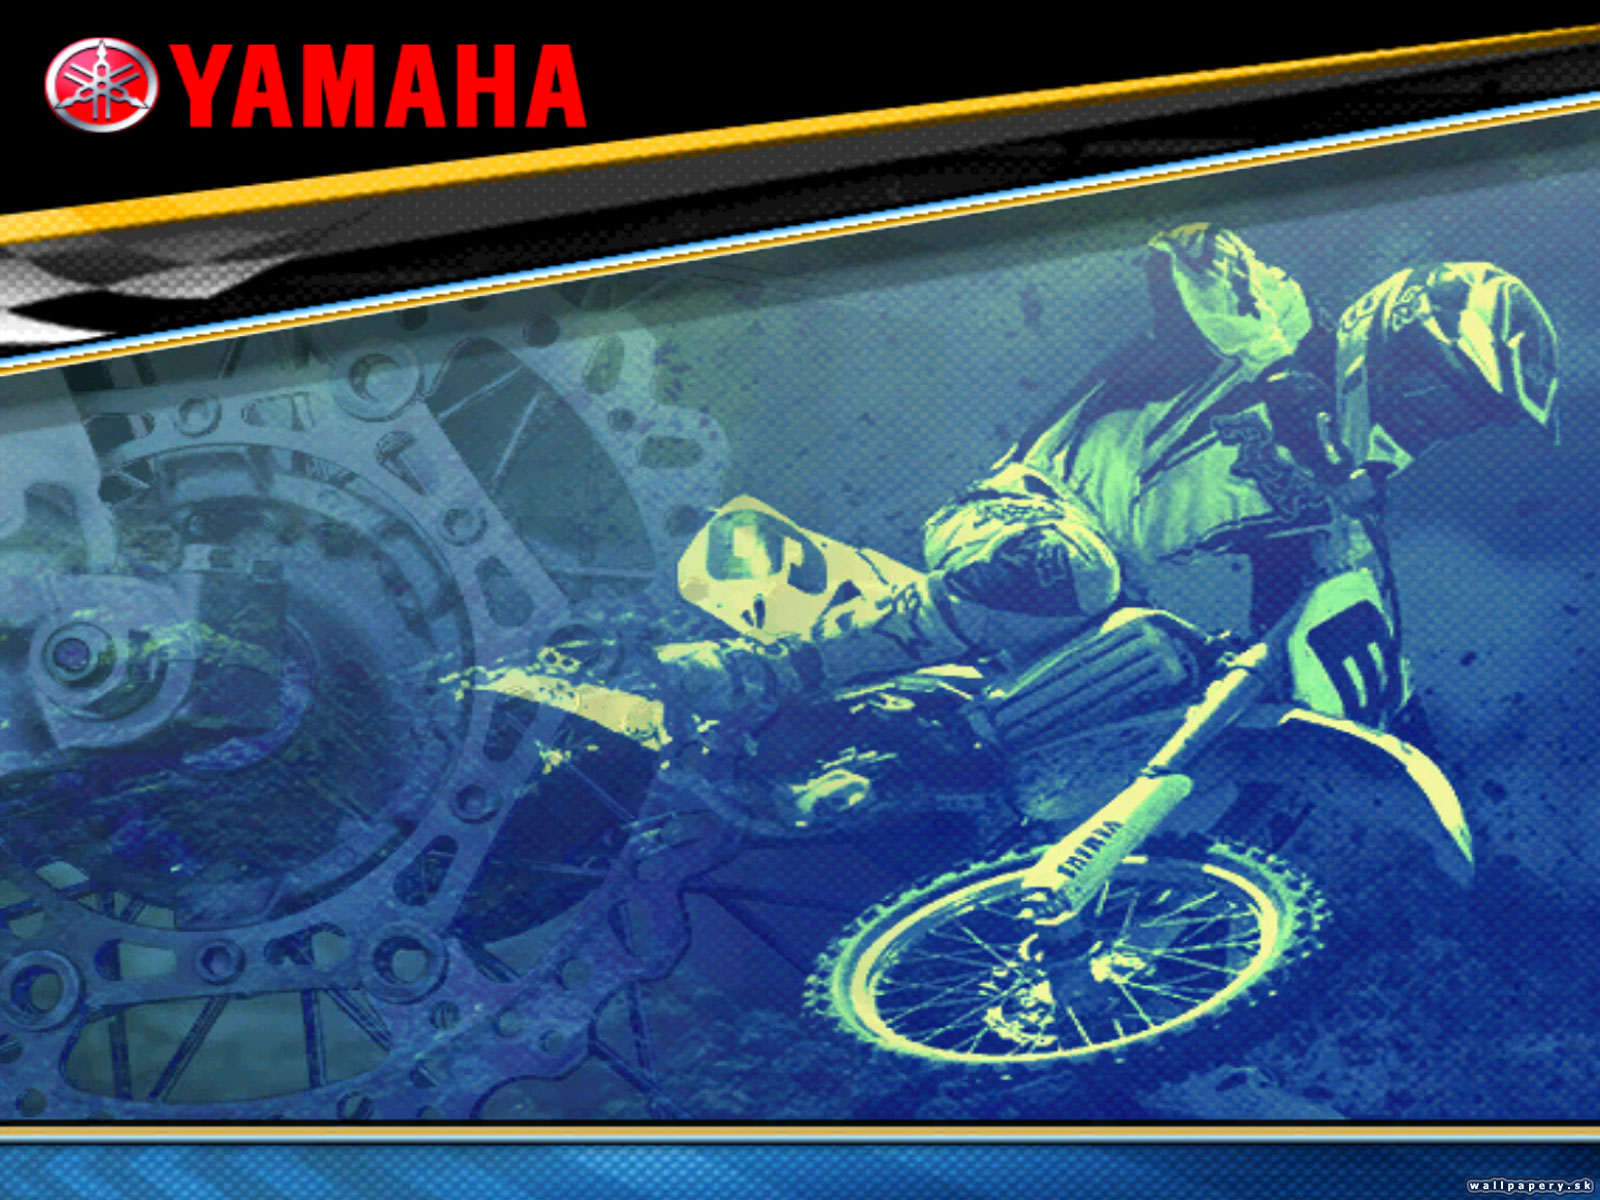 Yamaha Supercross - wallpaper 2